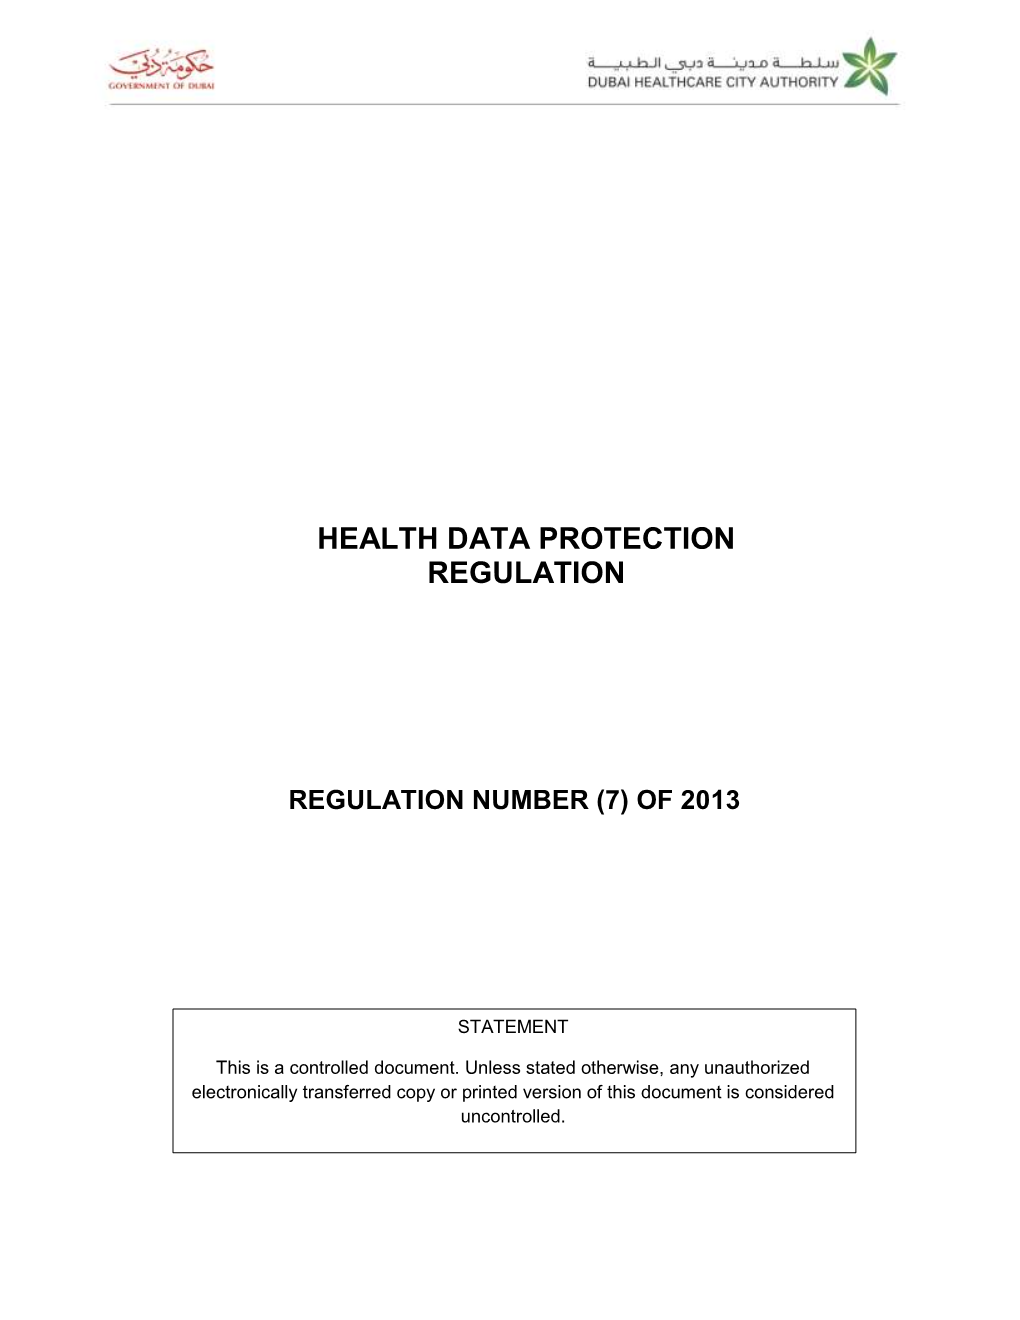 Health Data Protection Regulation